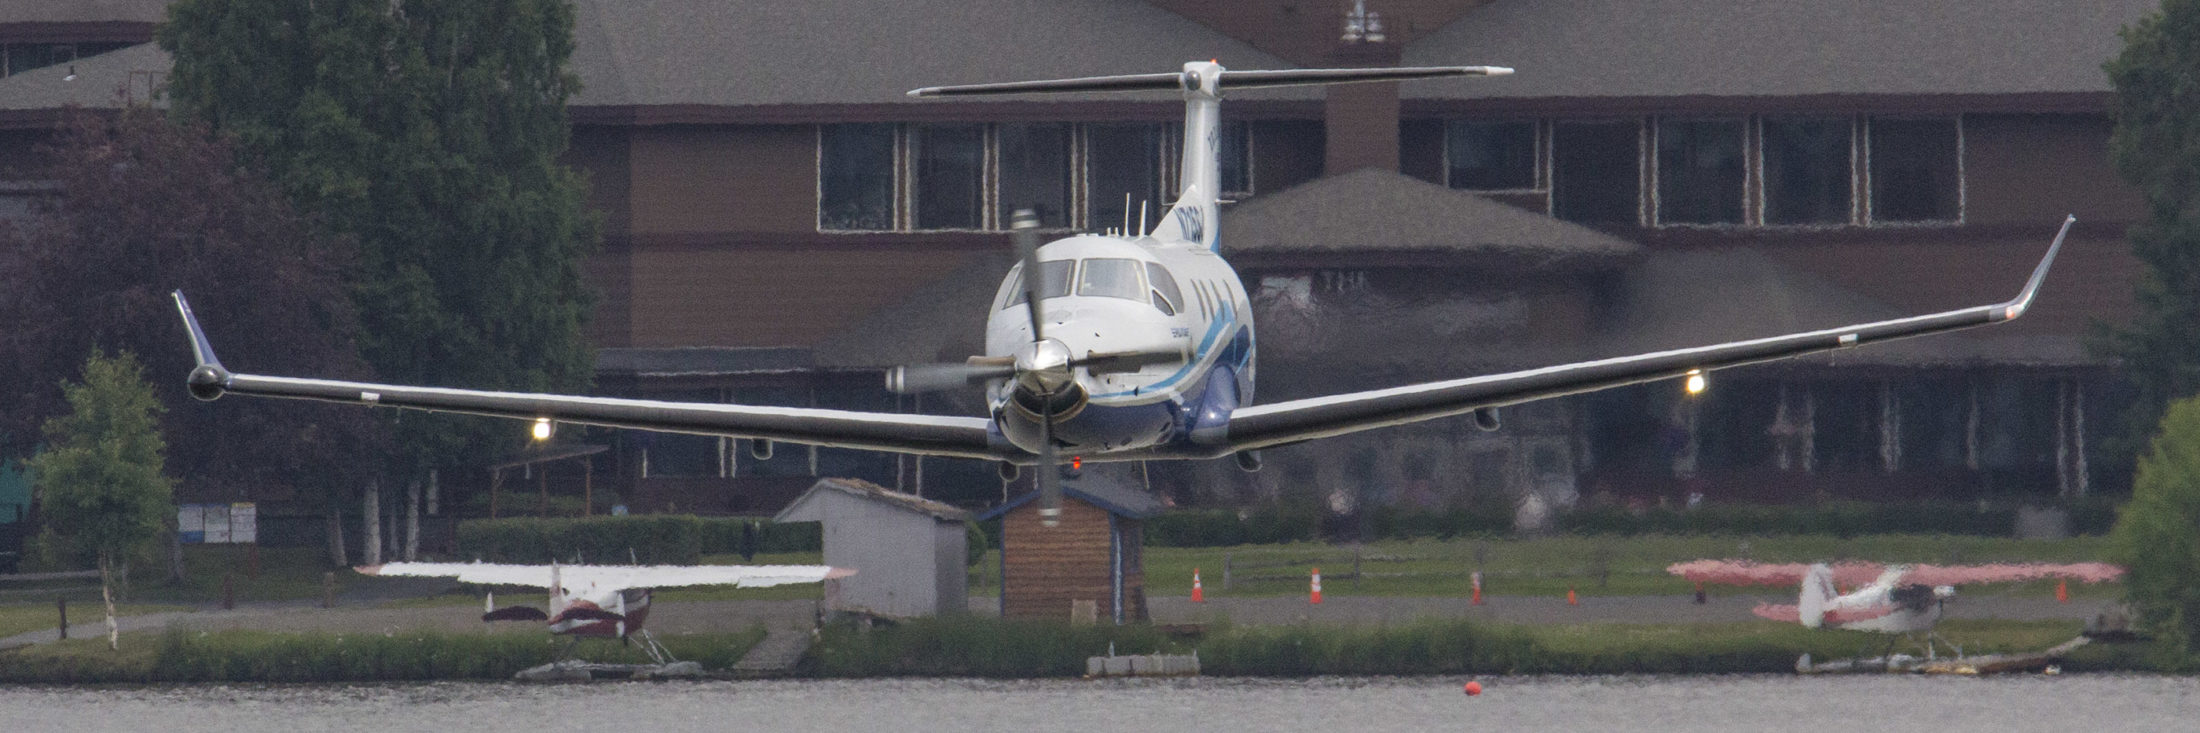 Alaskafoto aircraft image